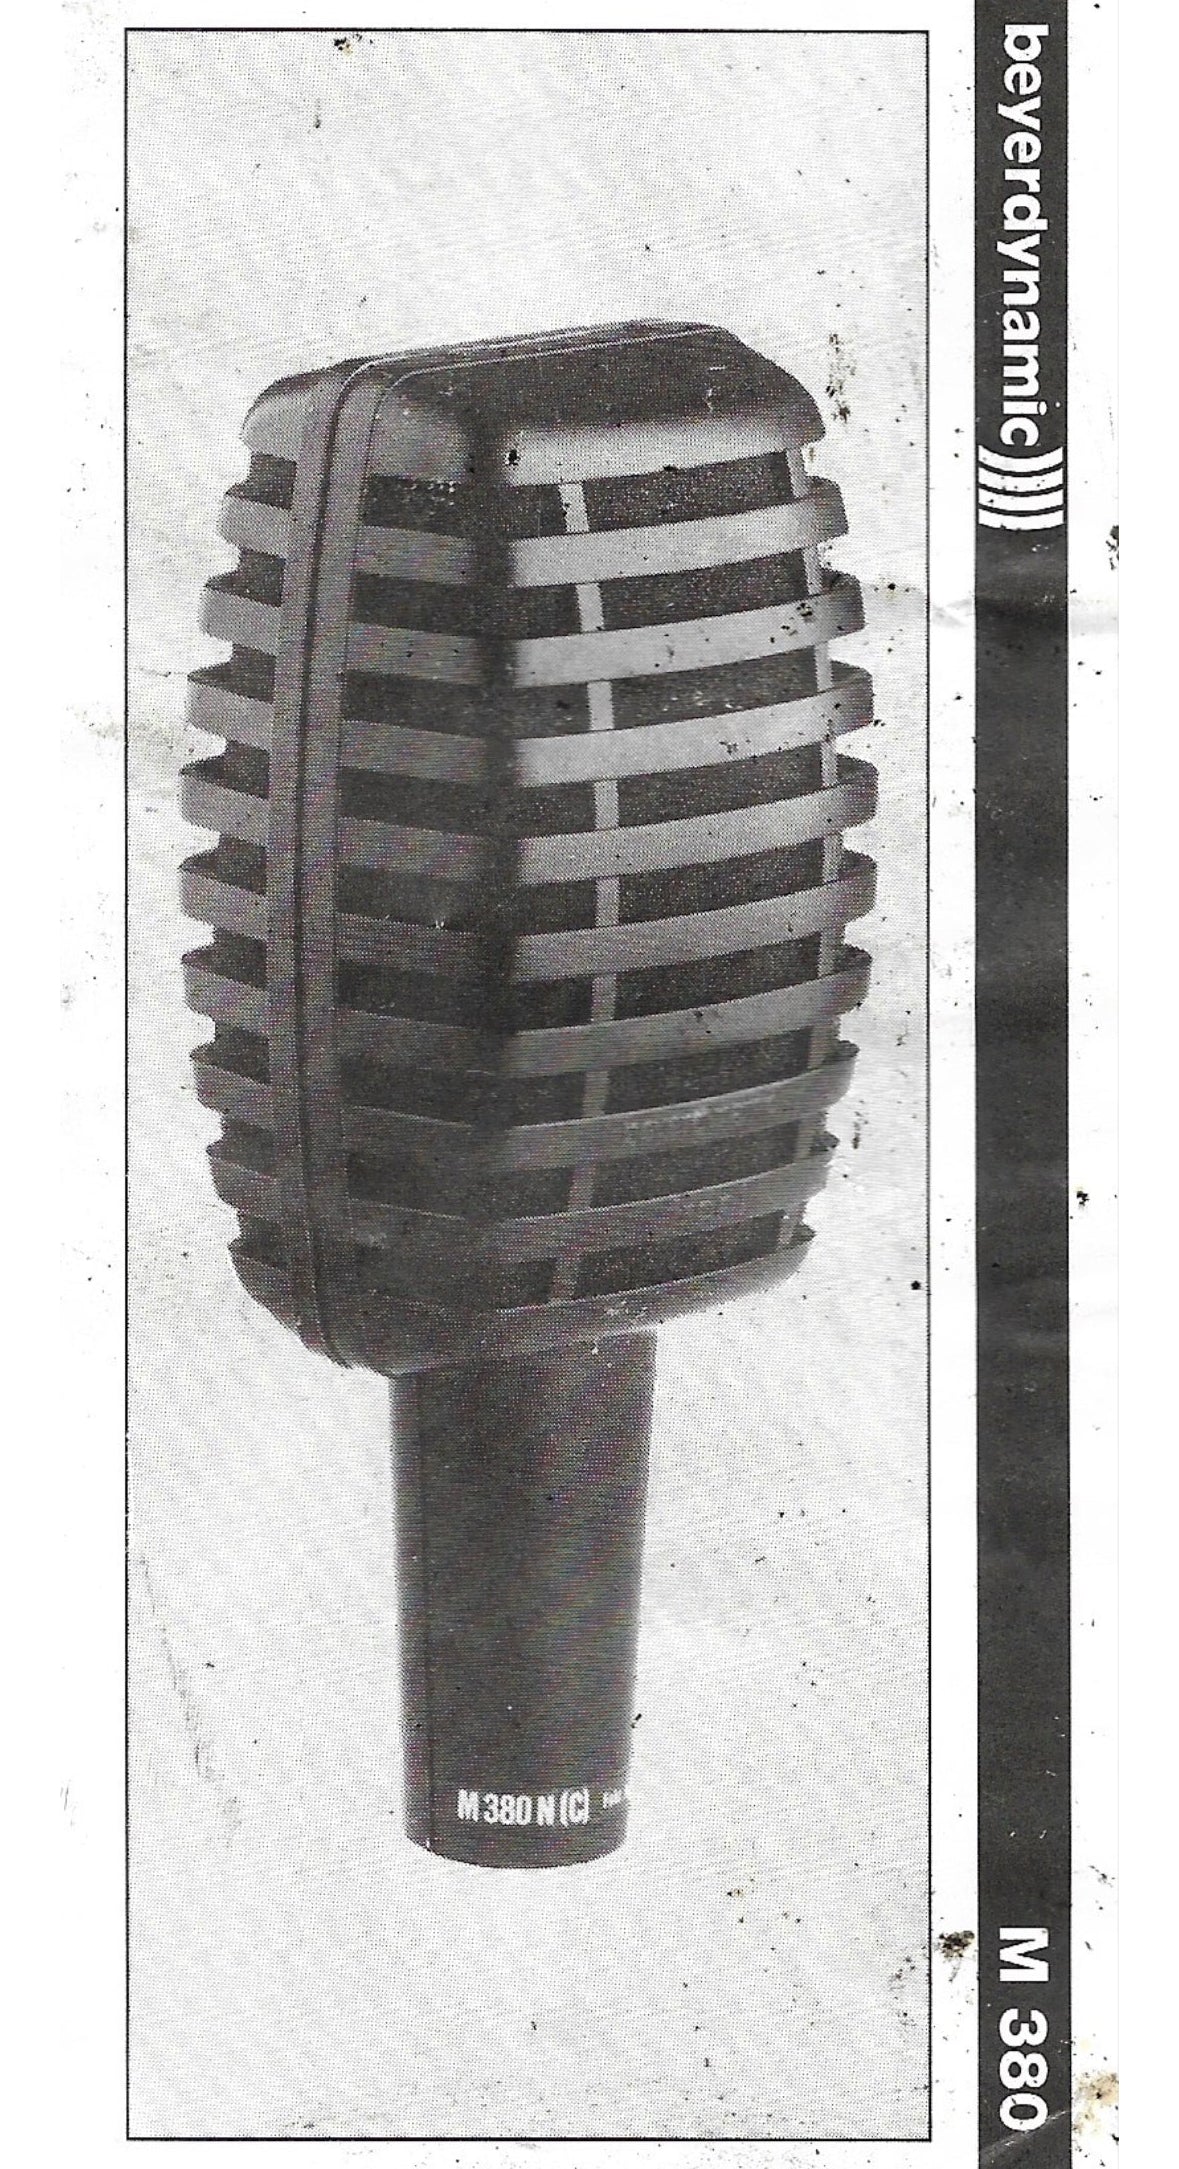 Beyerdynamic M380 (Converted from TGX50)